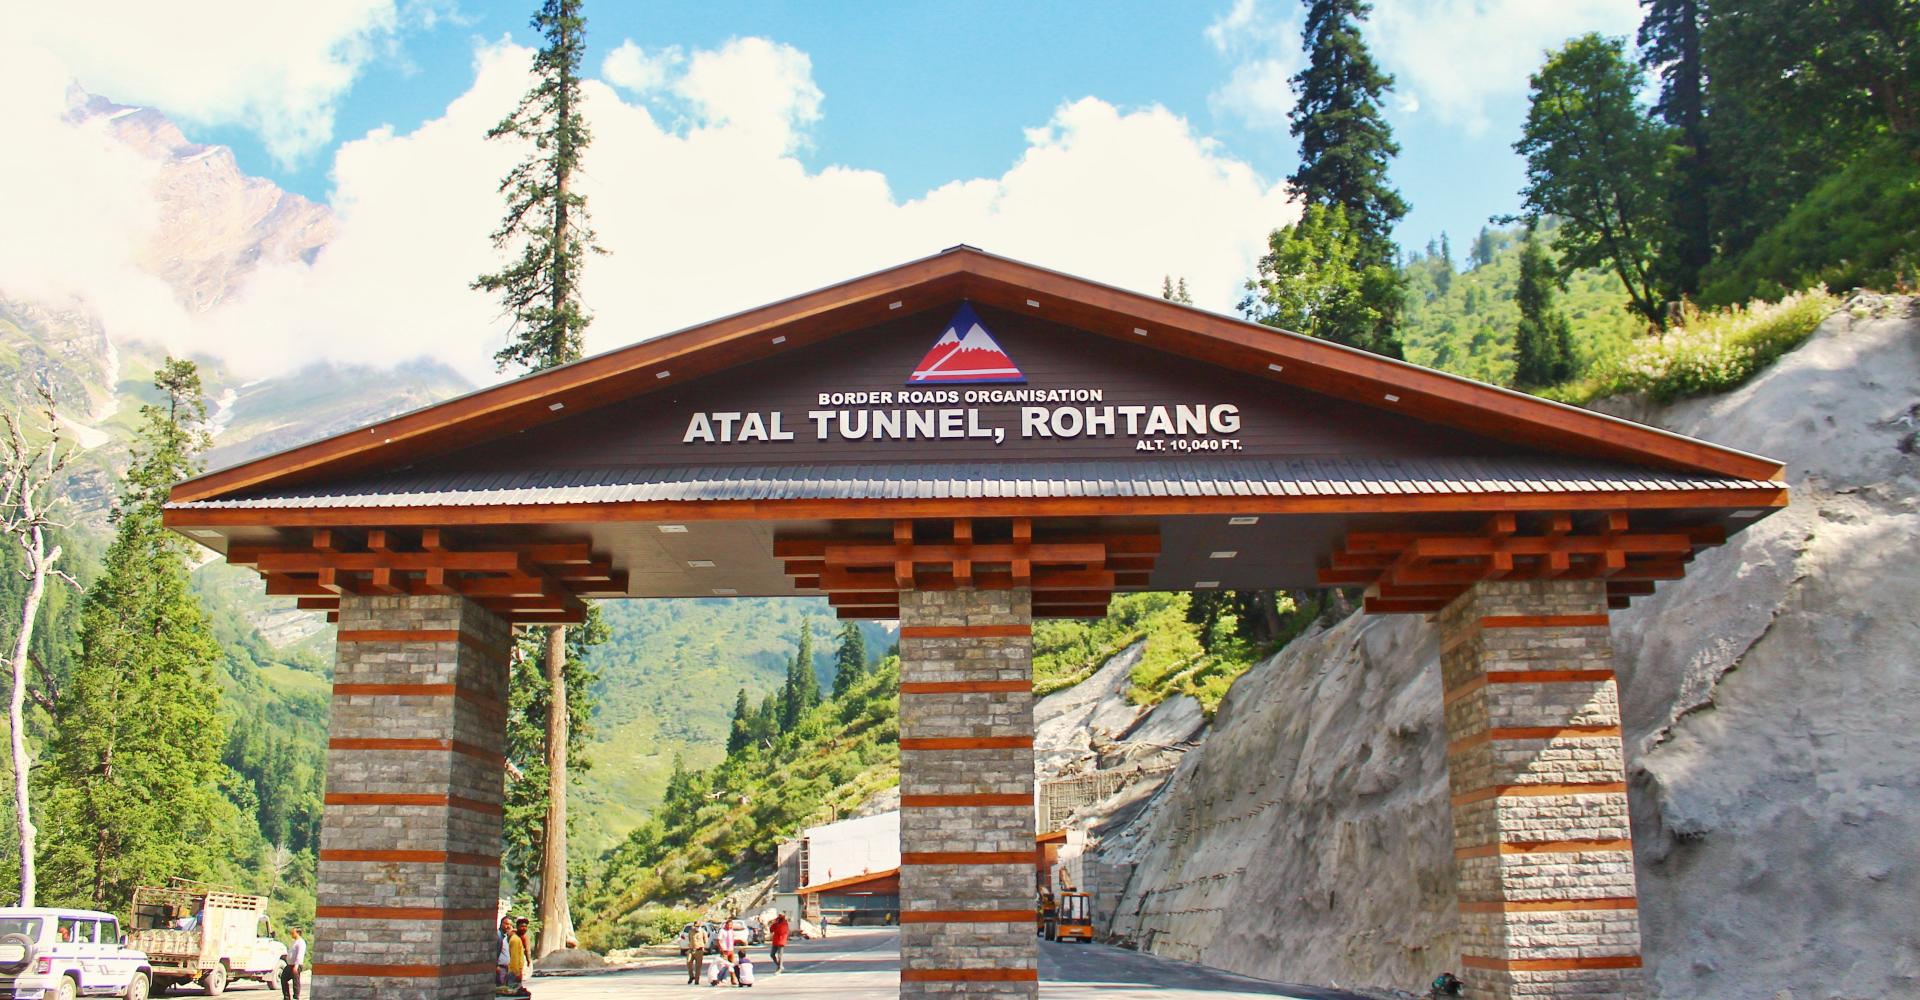 Tunnel d'Atal, Rohtang, Himachal Pradesh, Inde